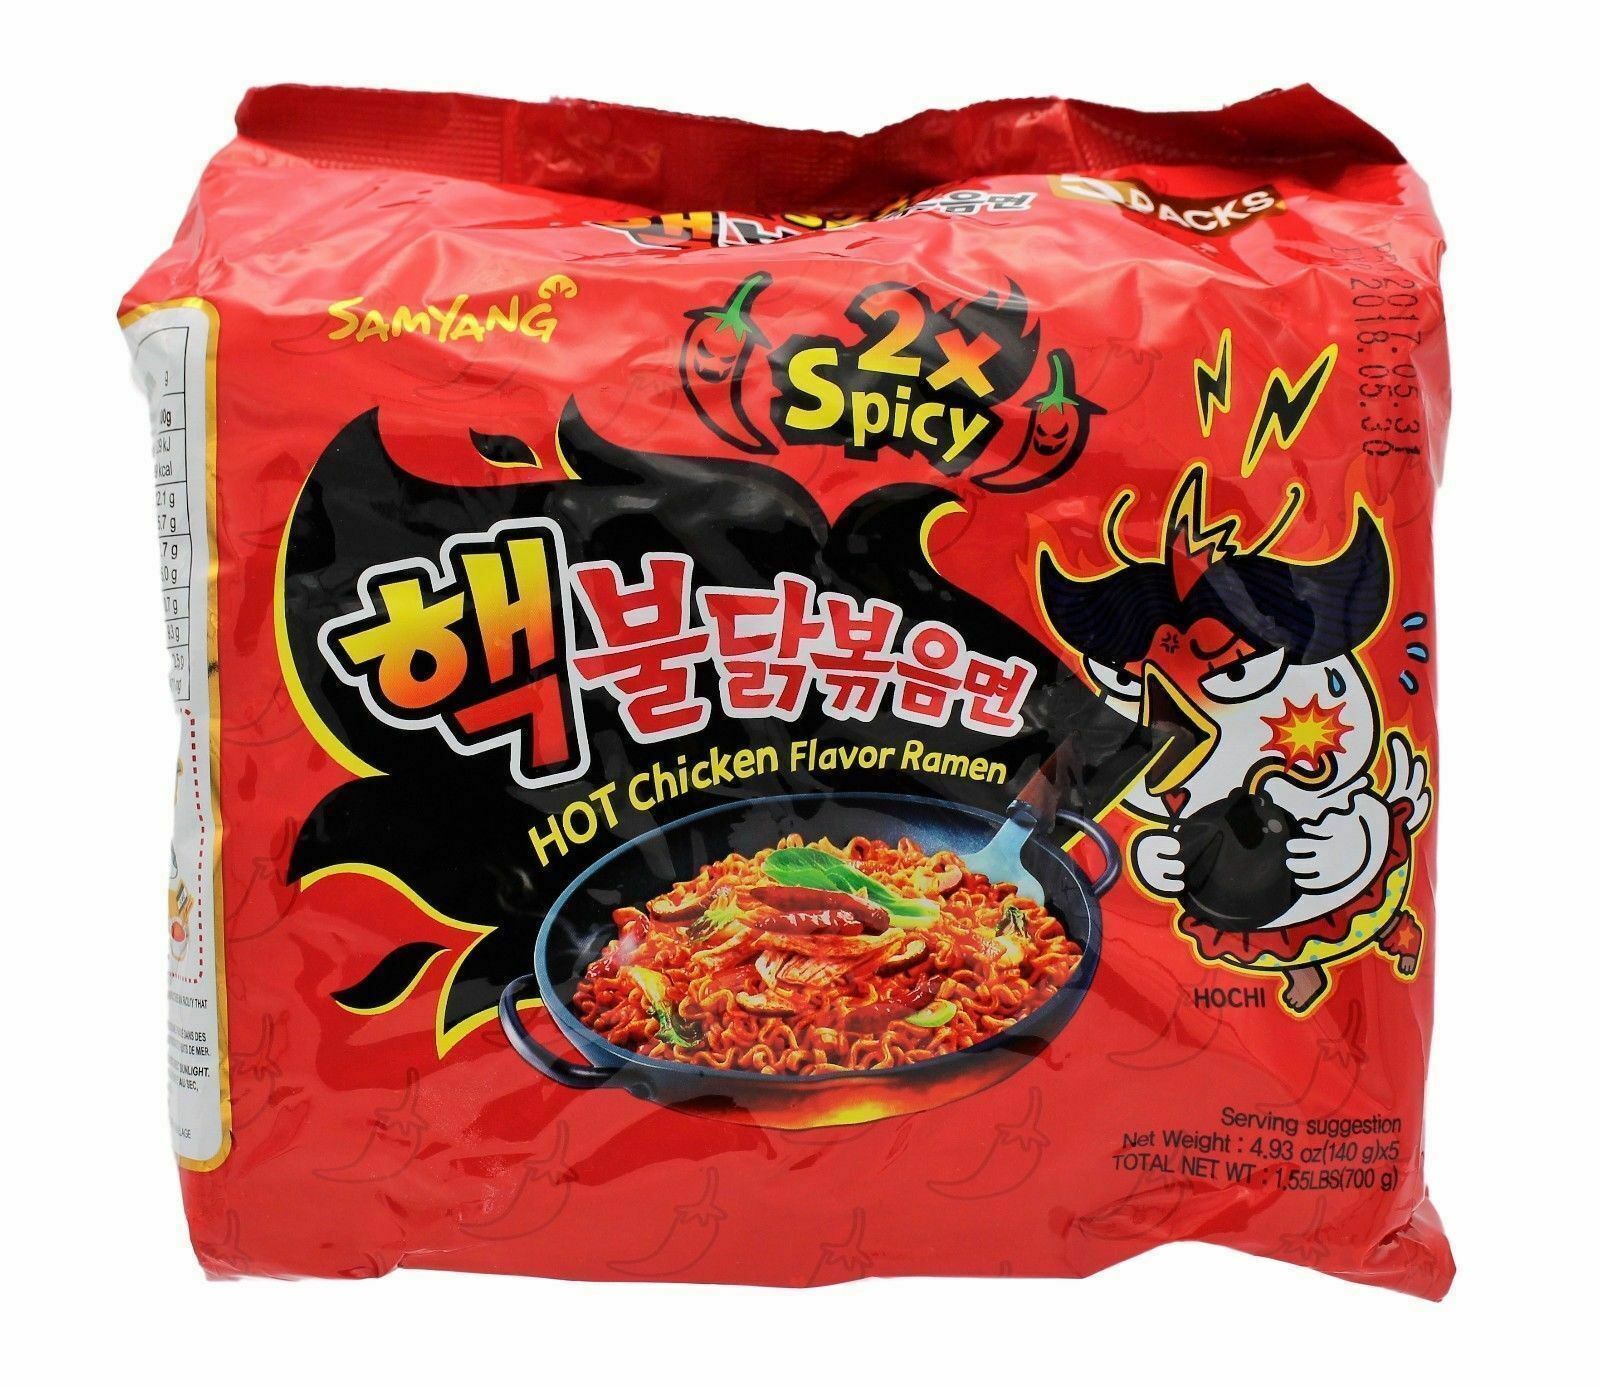 Samyang Korean Fire Challenge Buldak Noodle 2x Hot Spicy Chicken Flavor Ramen